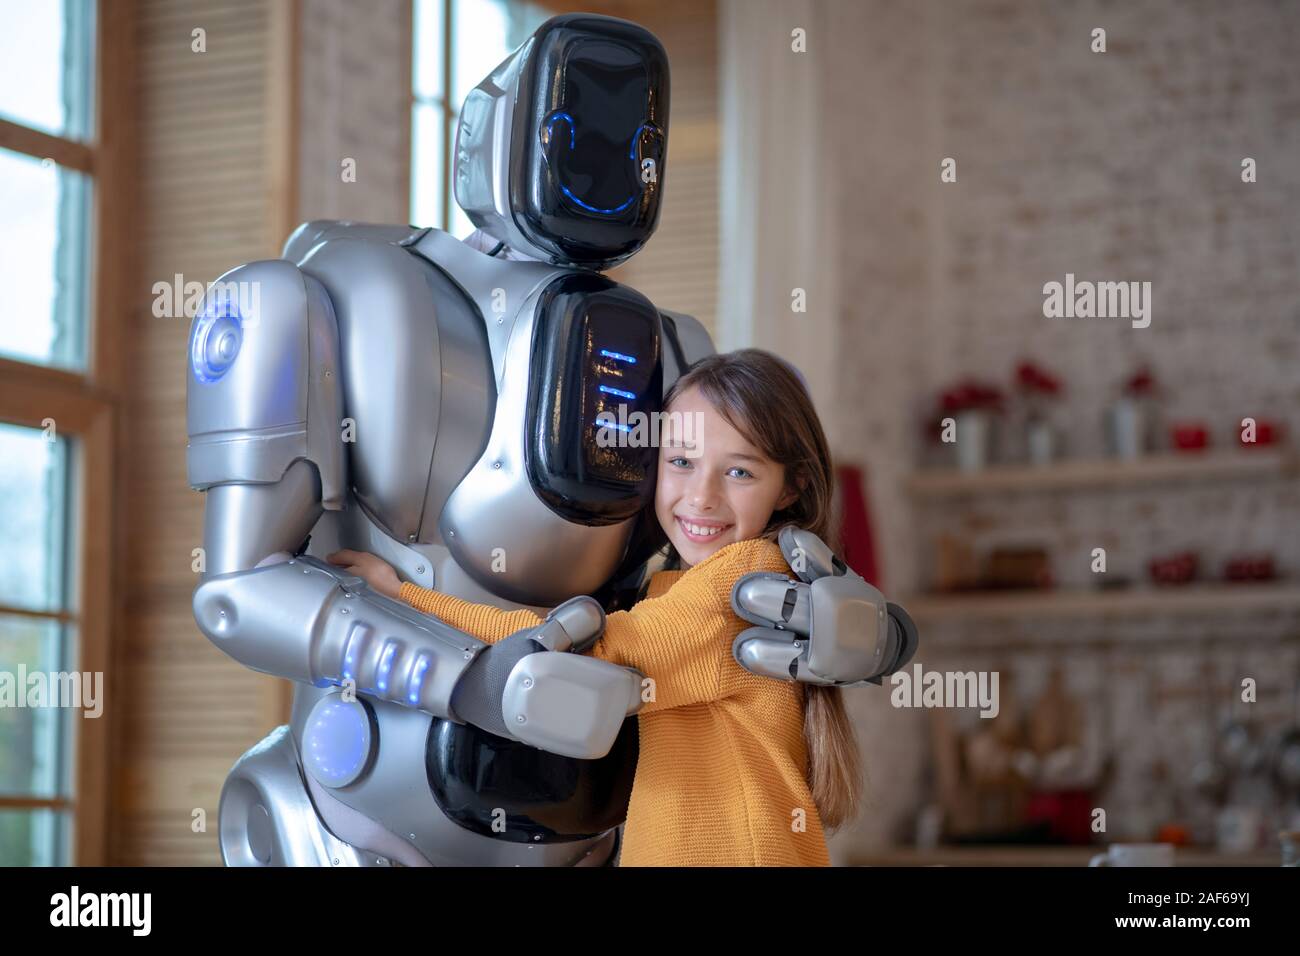 Huge Robot Girl!